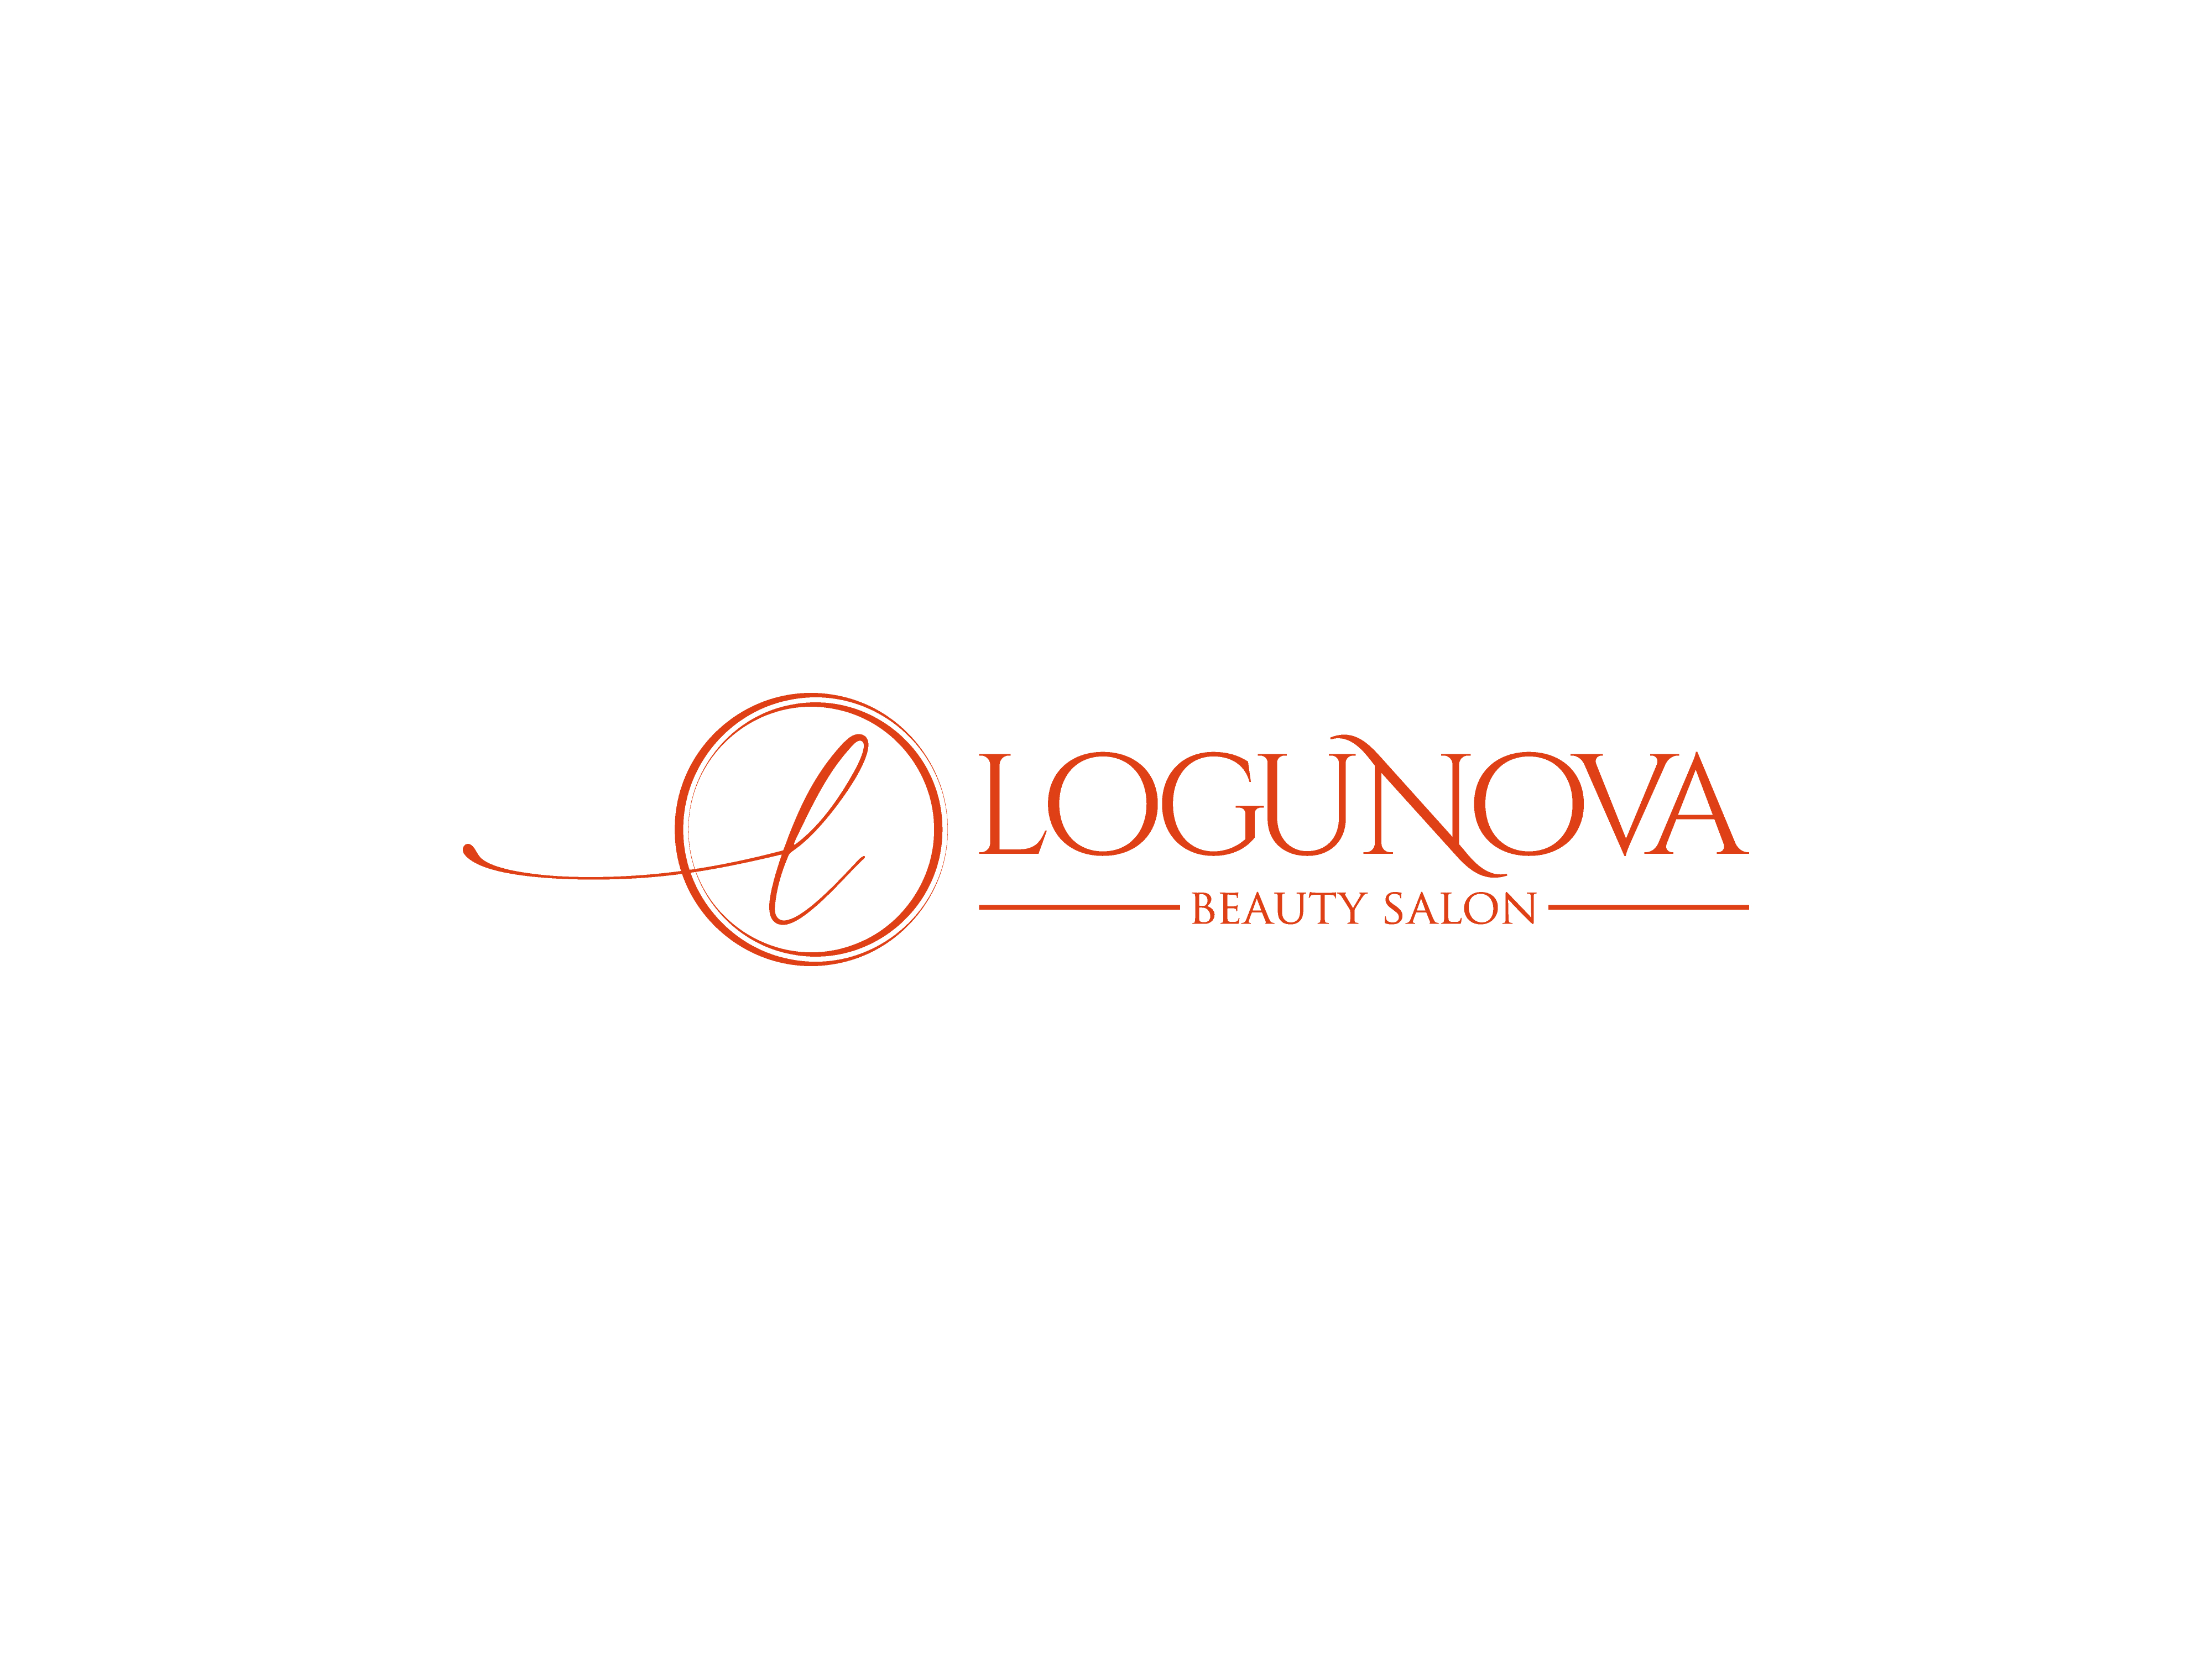 Logunova-Beauty-Salon-logo.jpg